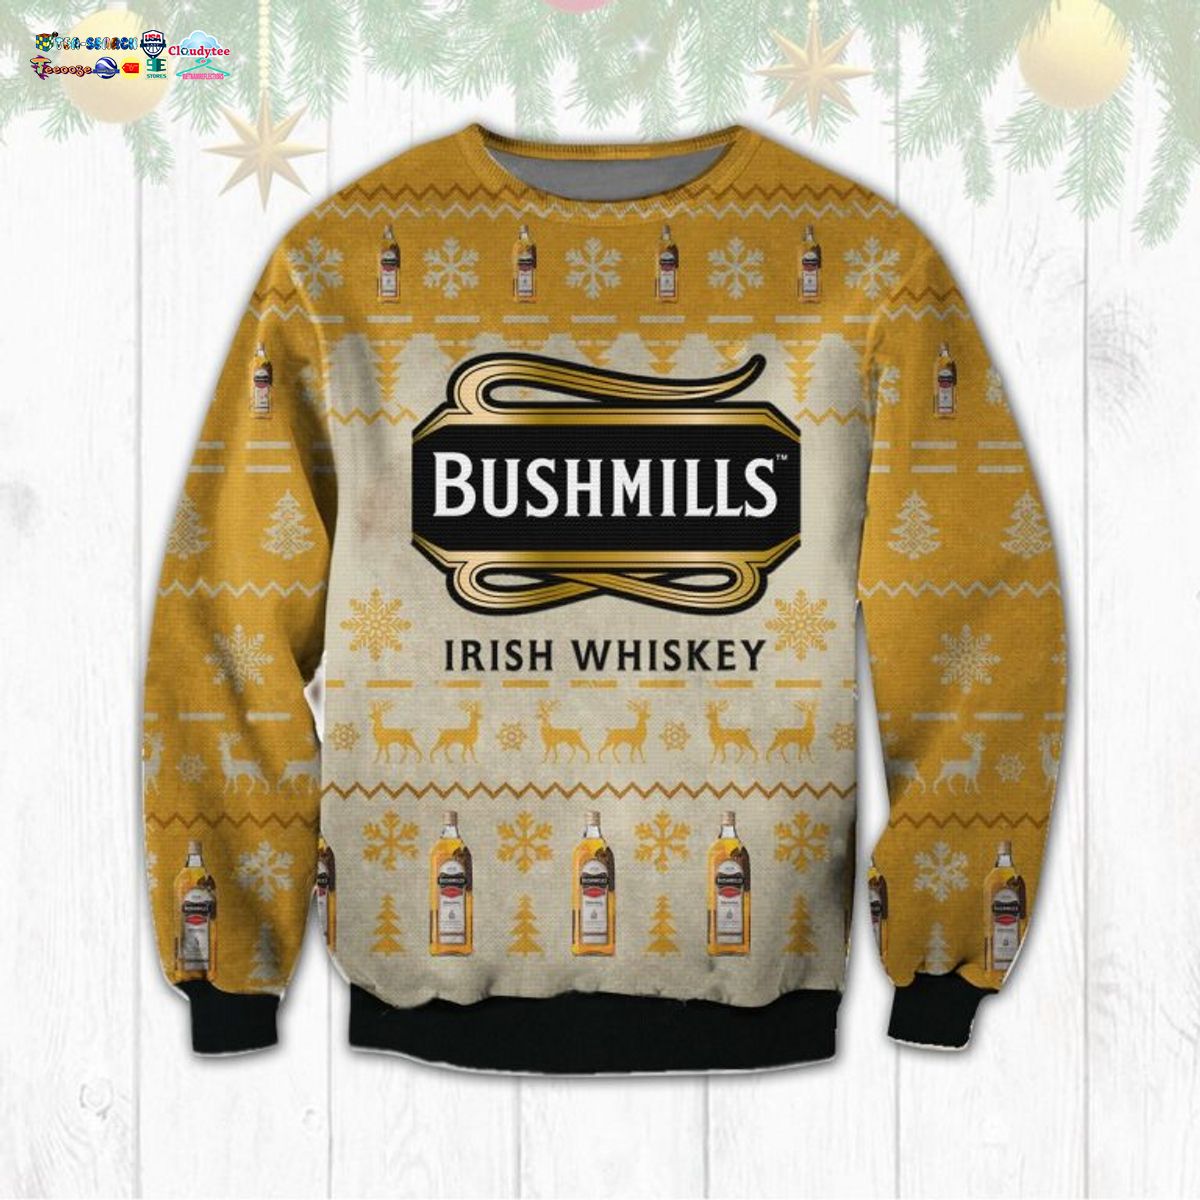 Bushmills Irish Whiskey Ugly Christmas Sweater - Nice photo dude